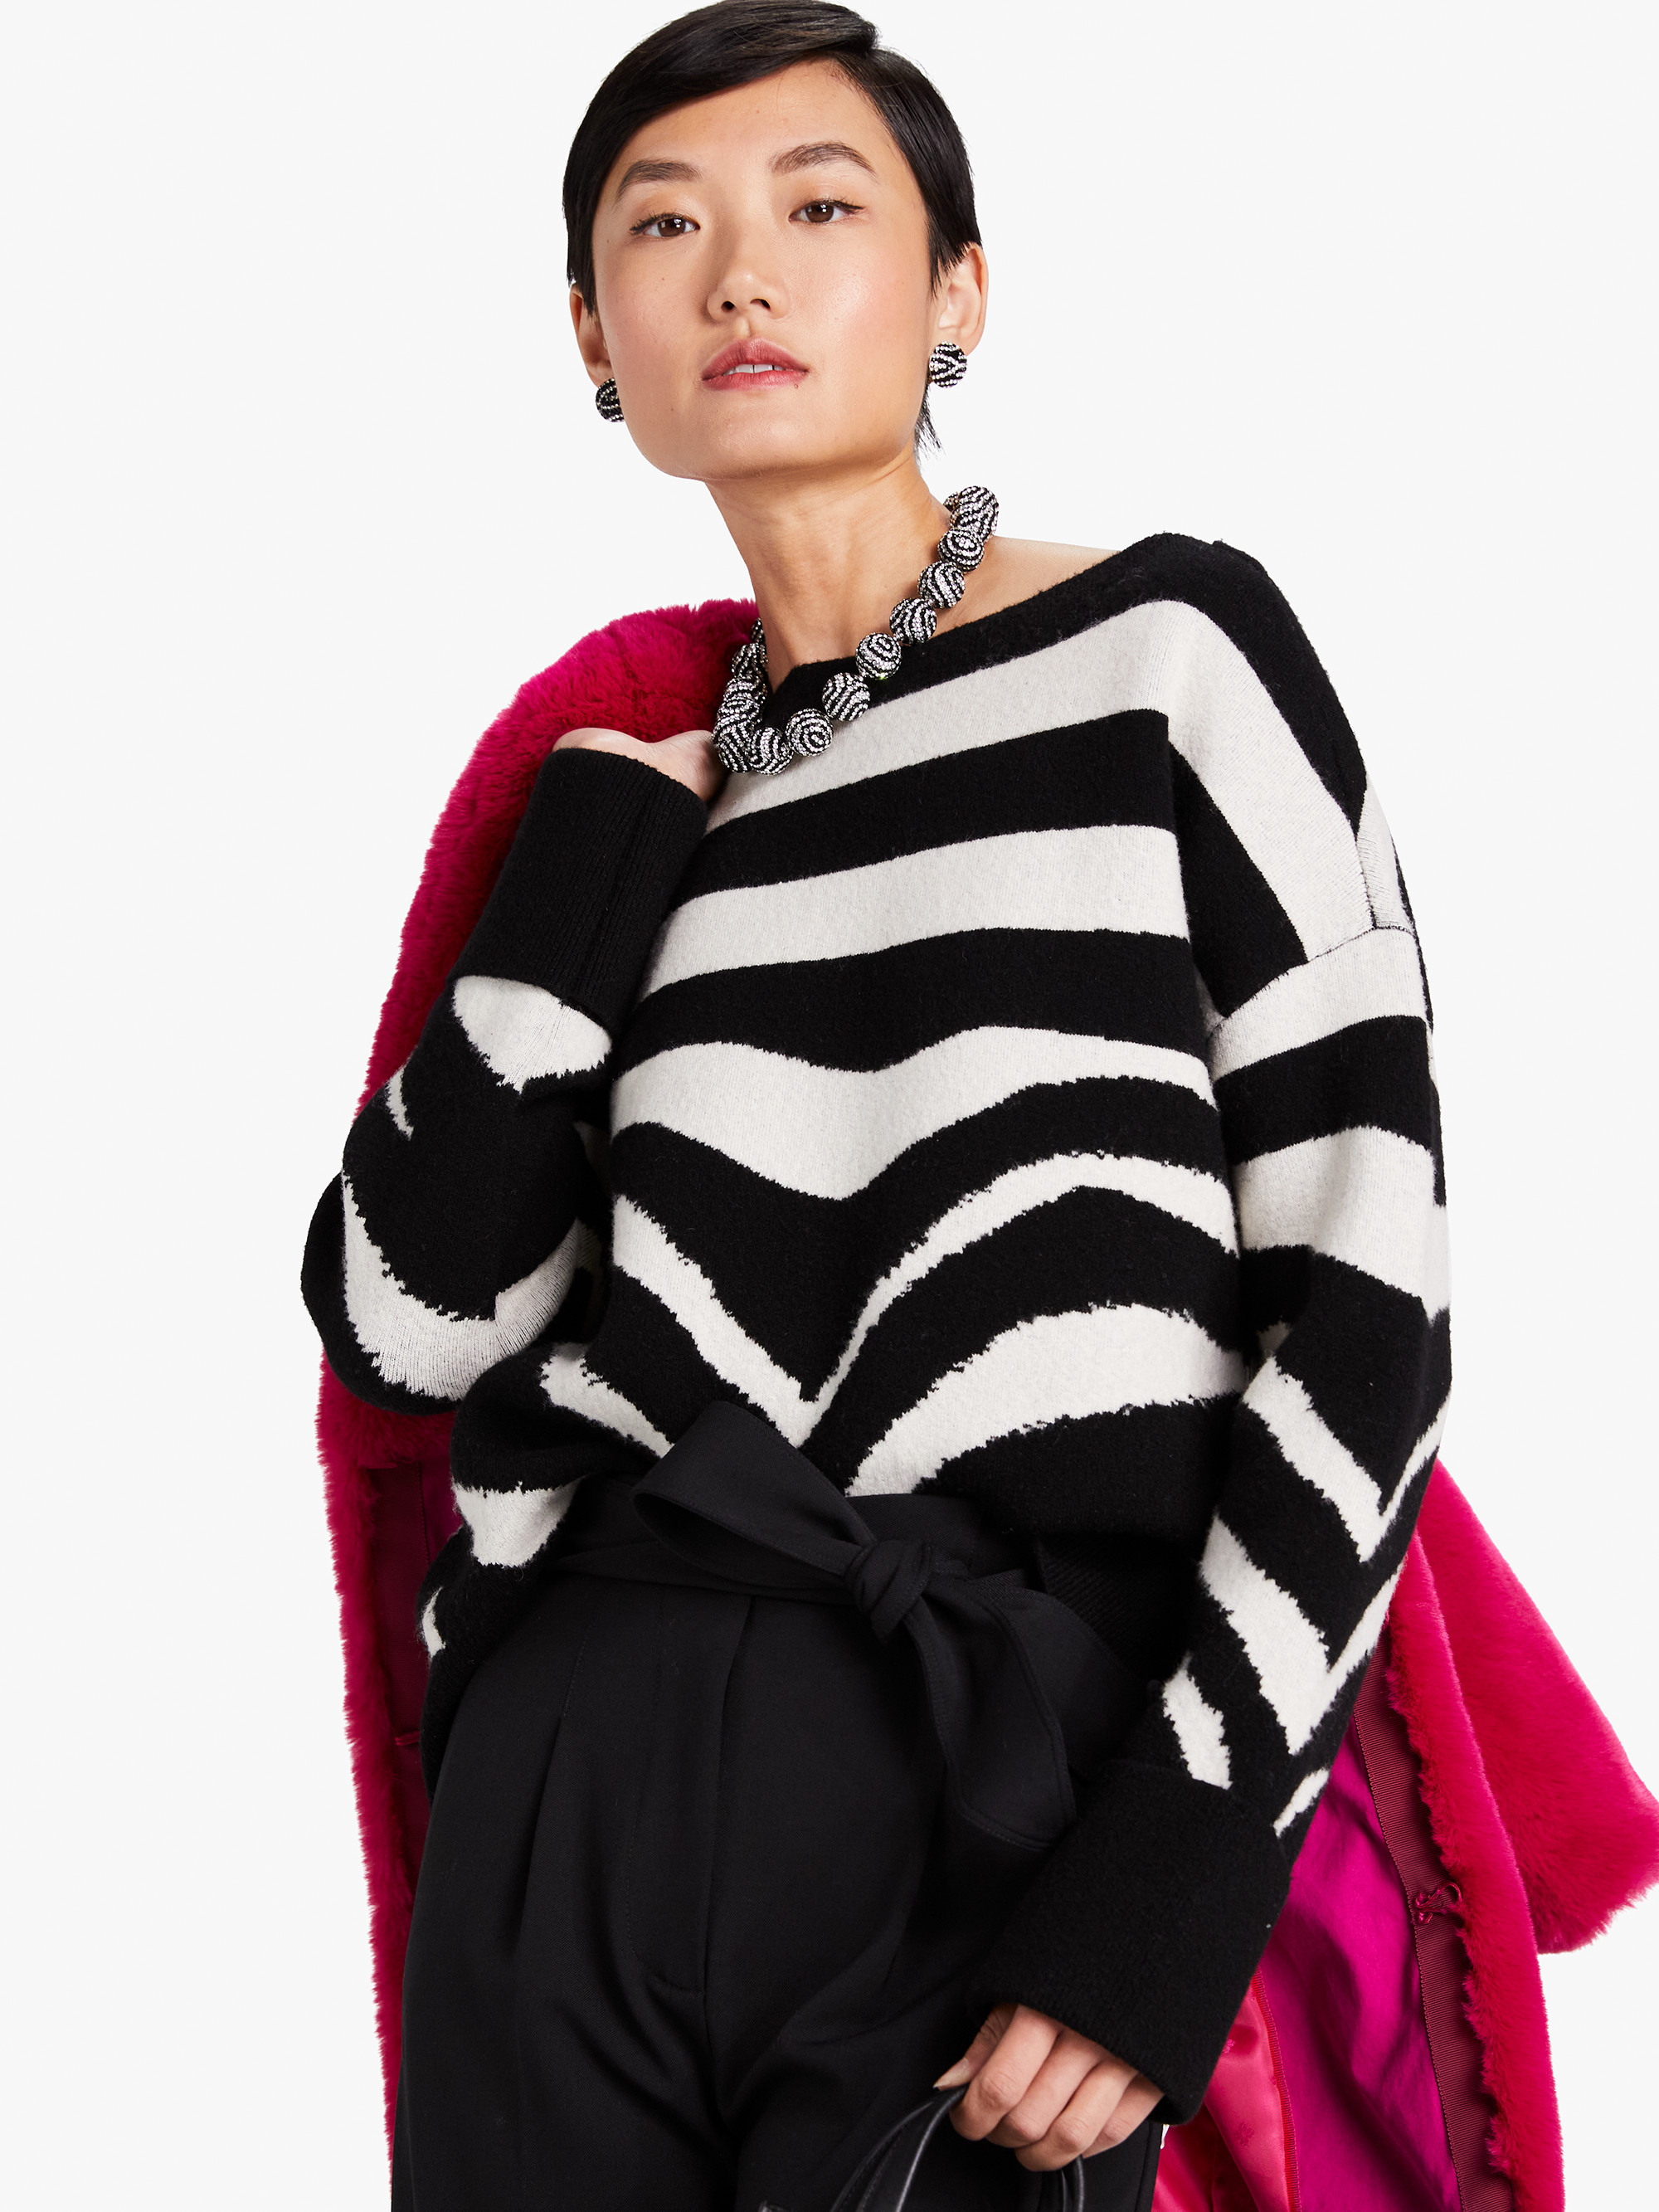 Kate Spade Bold Zebra Sweater